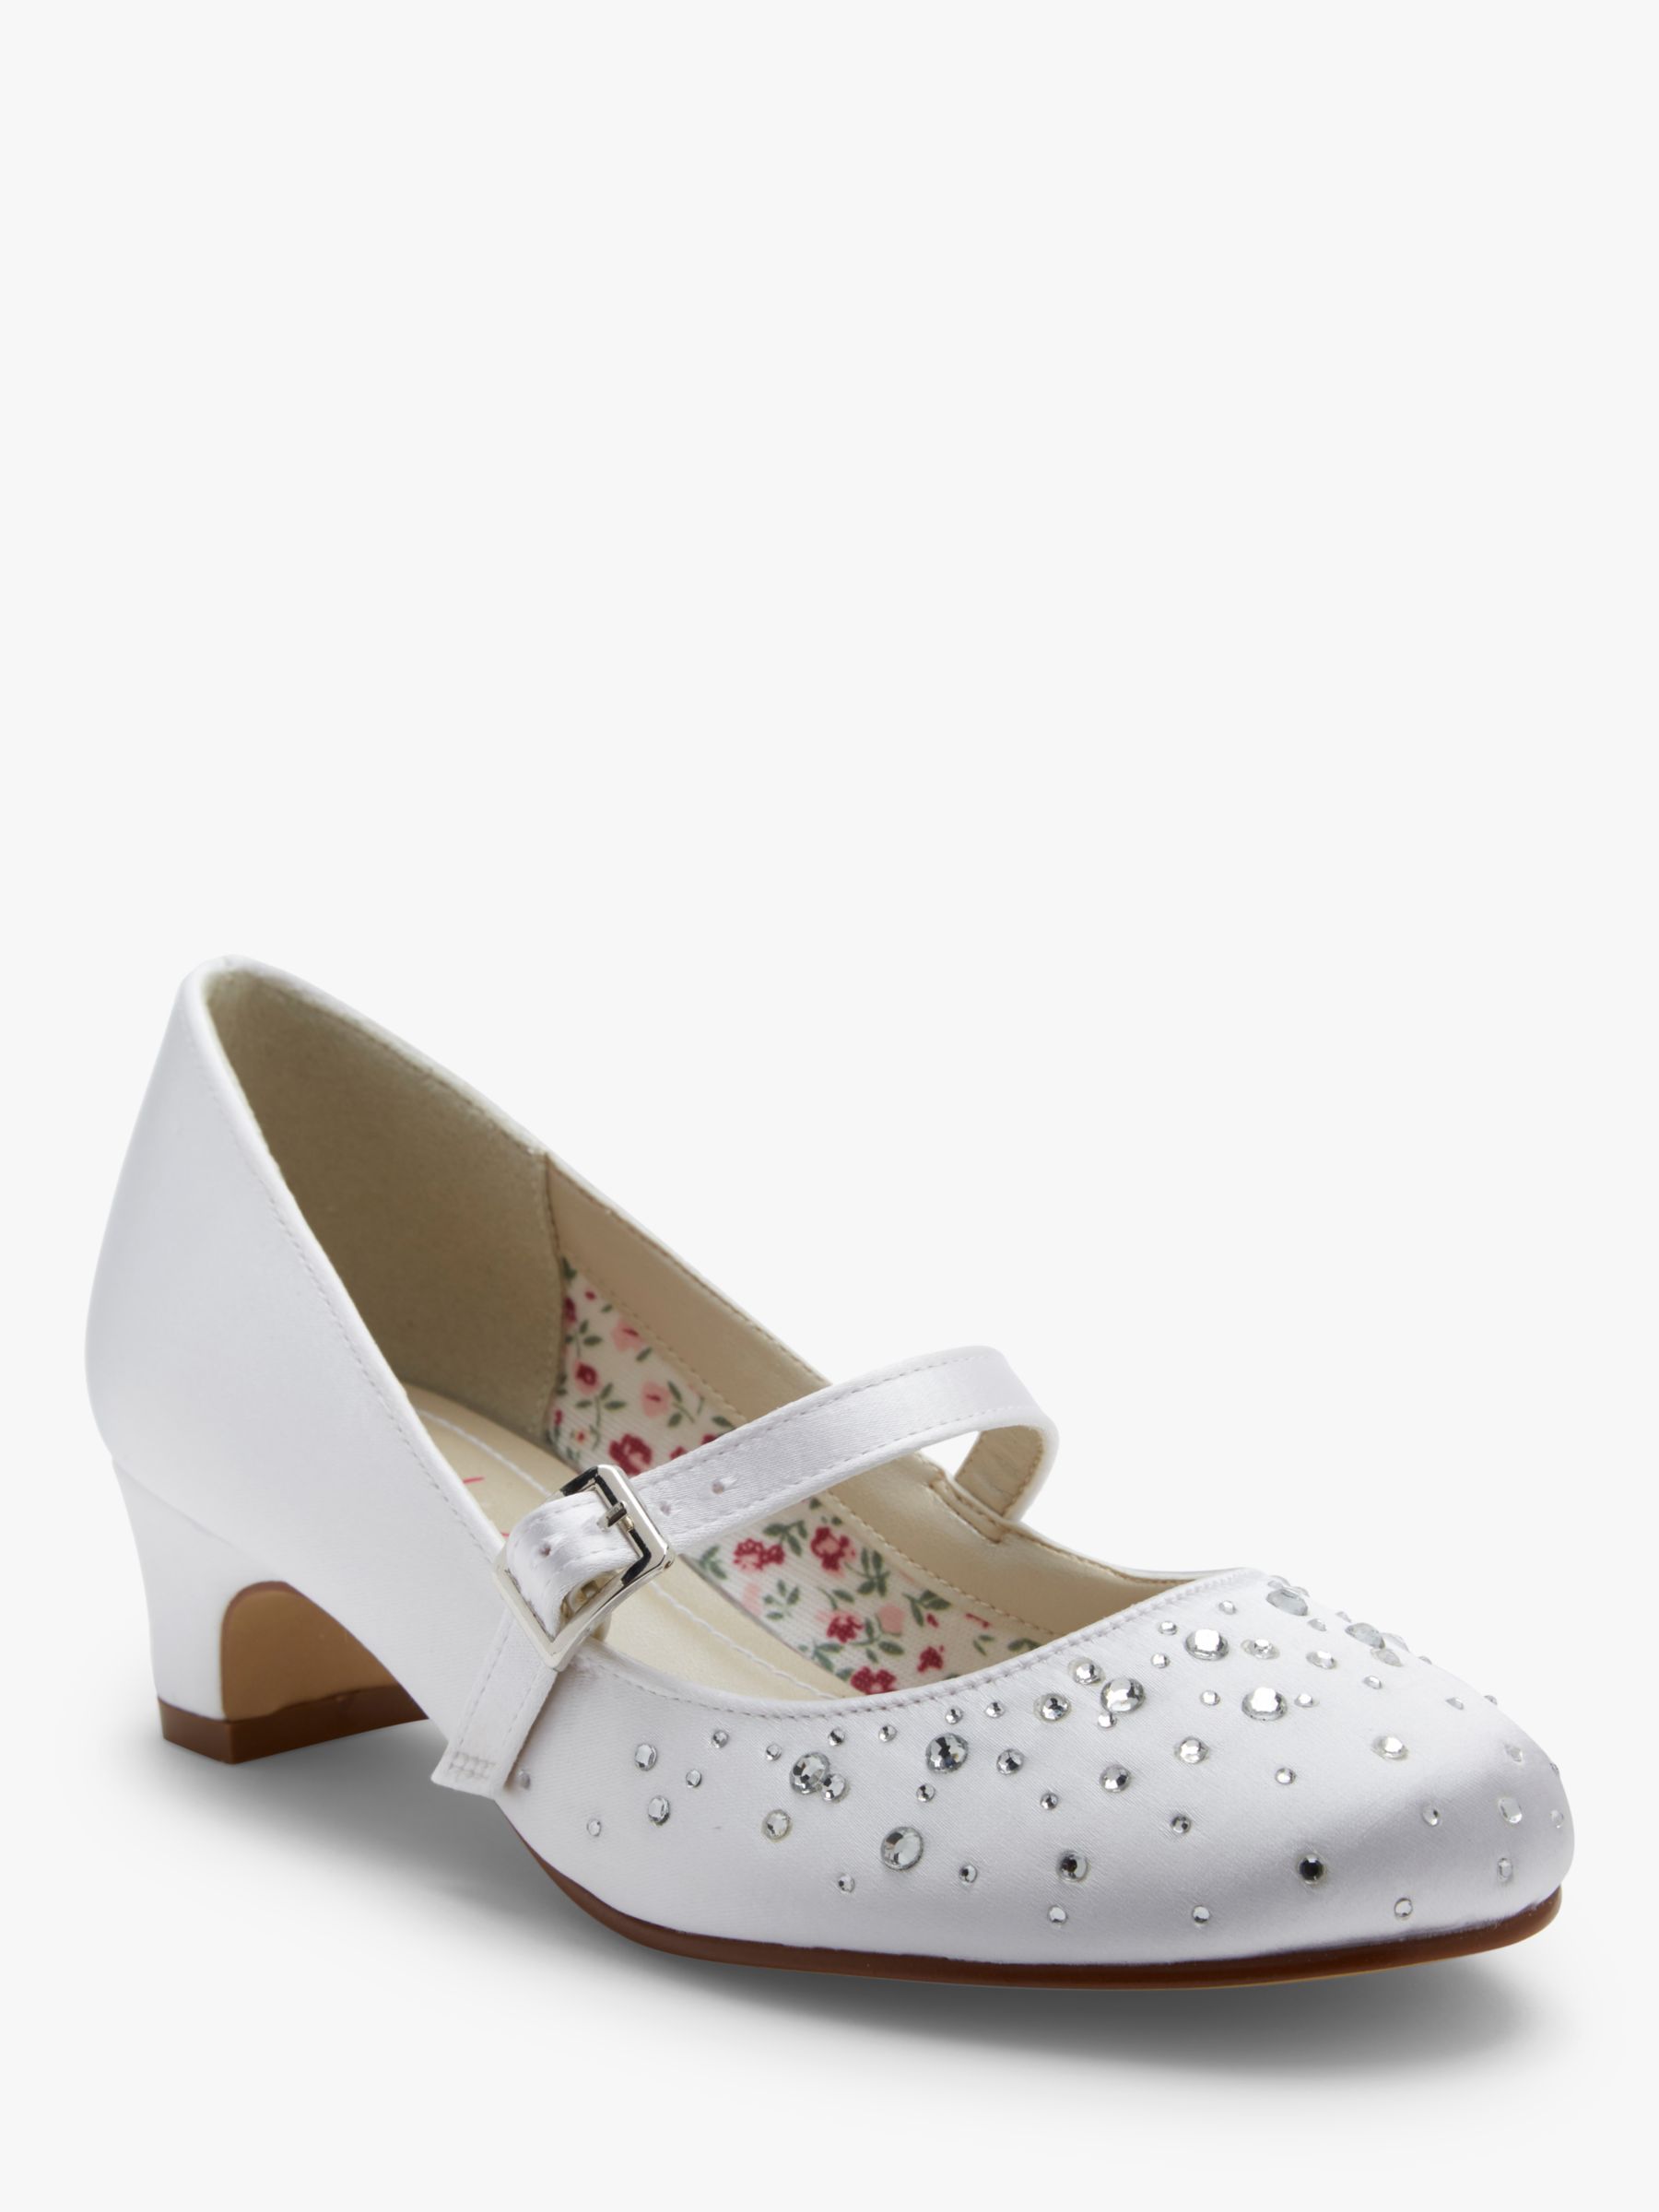 Buy Rainbow Club Cherry Bridesmaid Shoes, White Communion Online at johnlewis.com